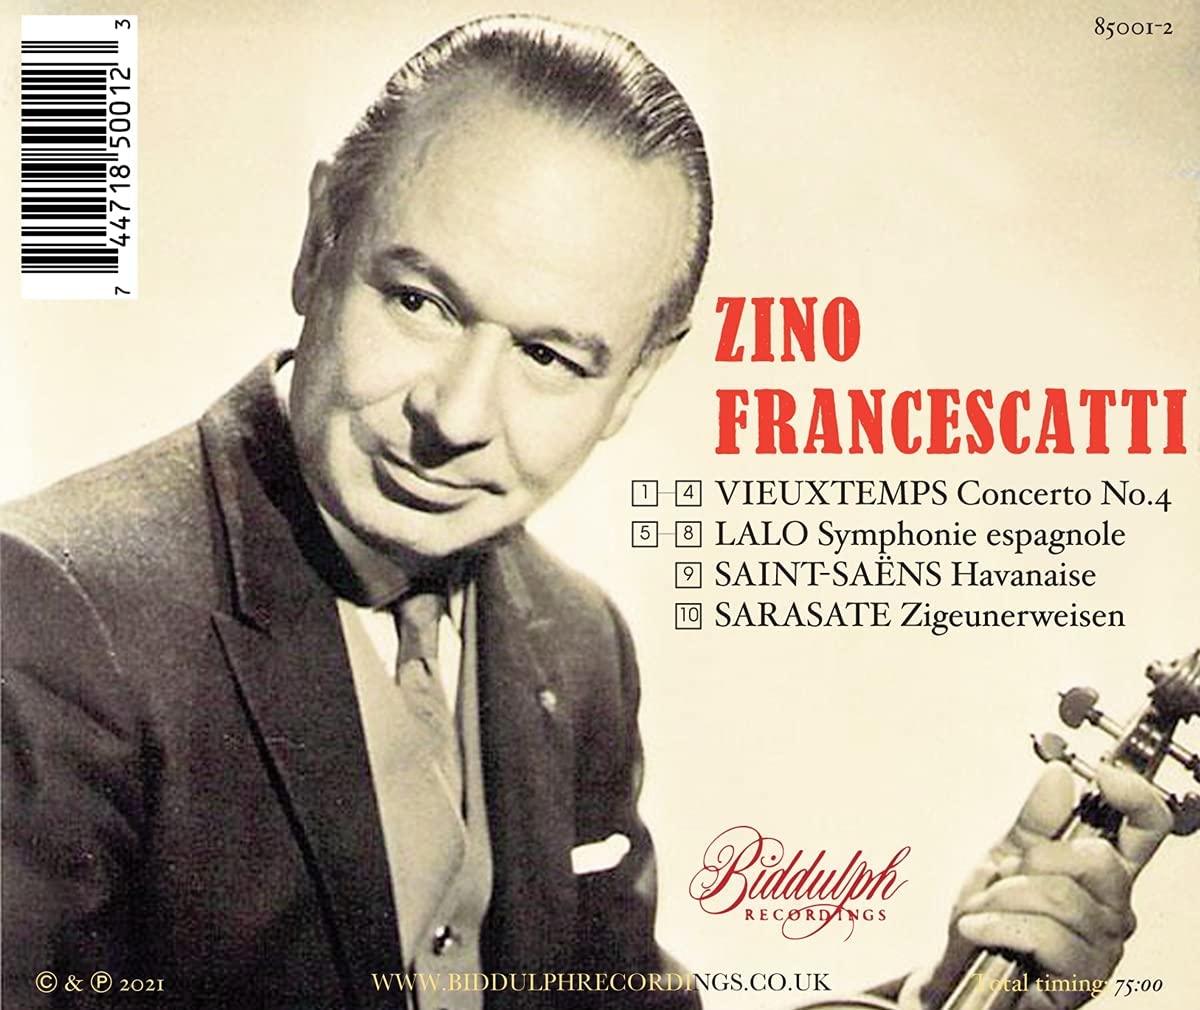 Zino Francescatti 랄로: 스페인 교향곡 / 생상스: 하바네즈 / 사라사테: 지고이르바이젠 / 비외탕: 바이올린 협주곡 